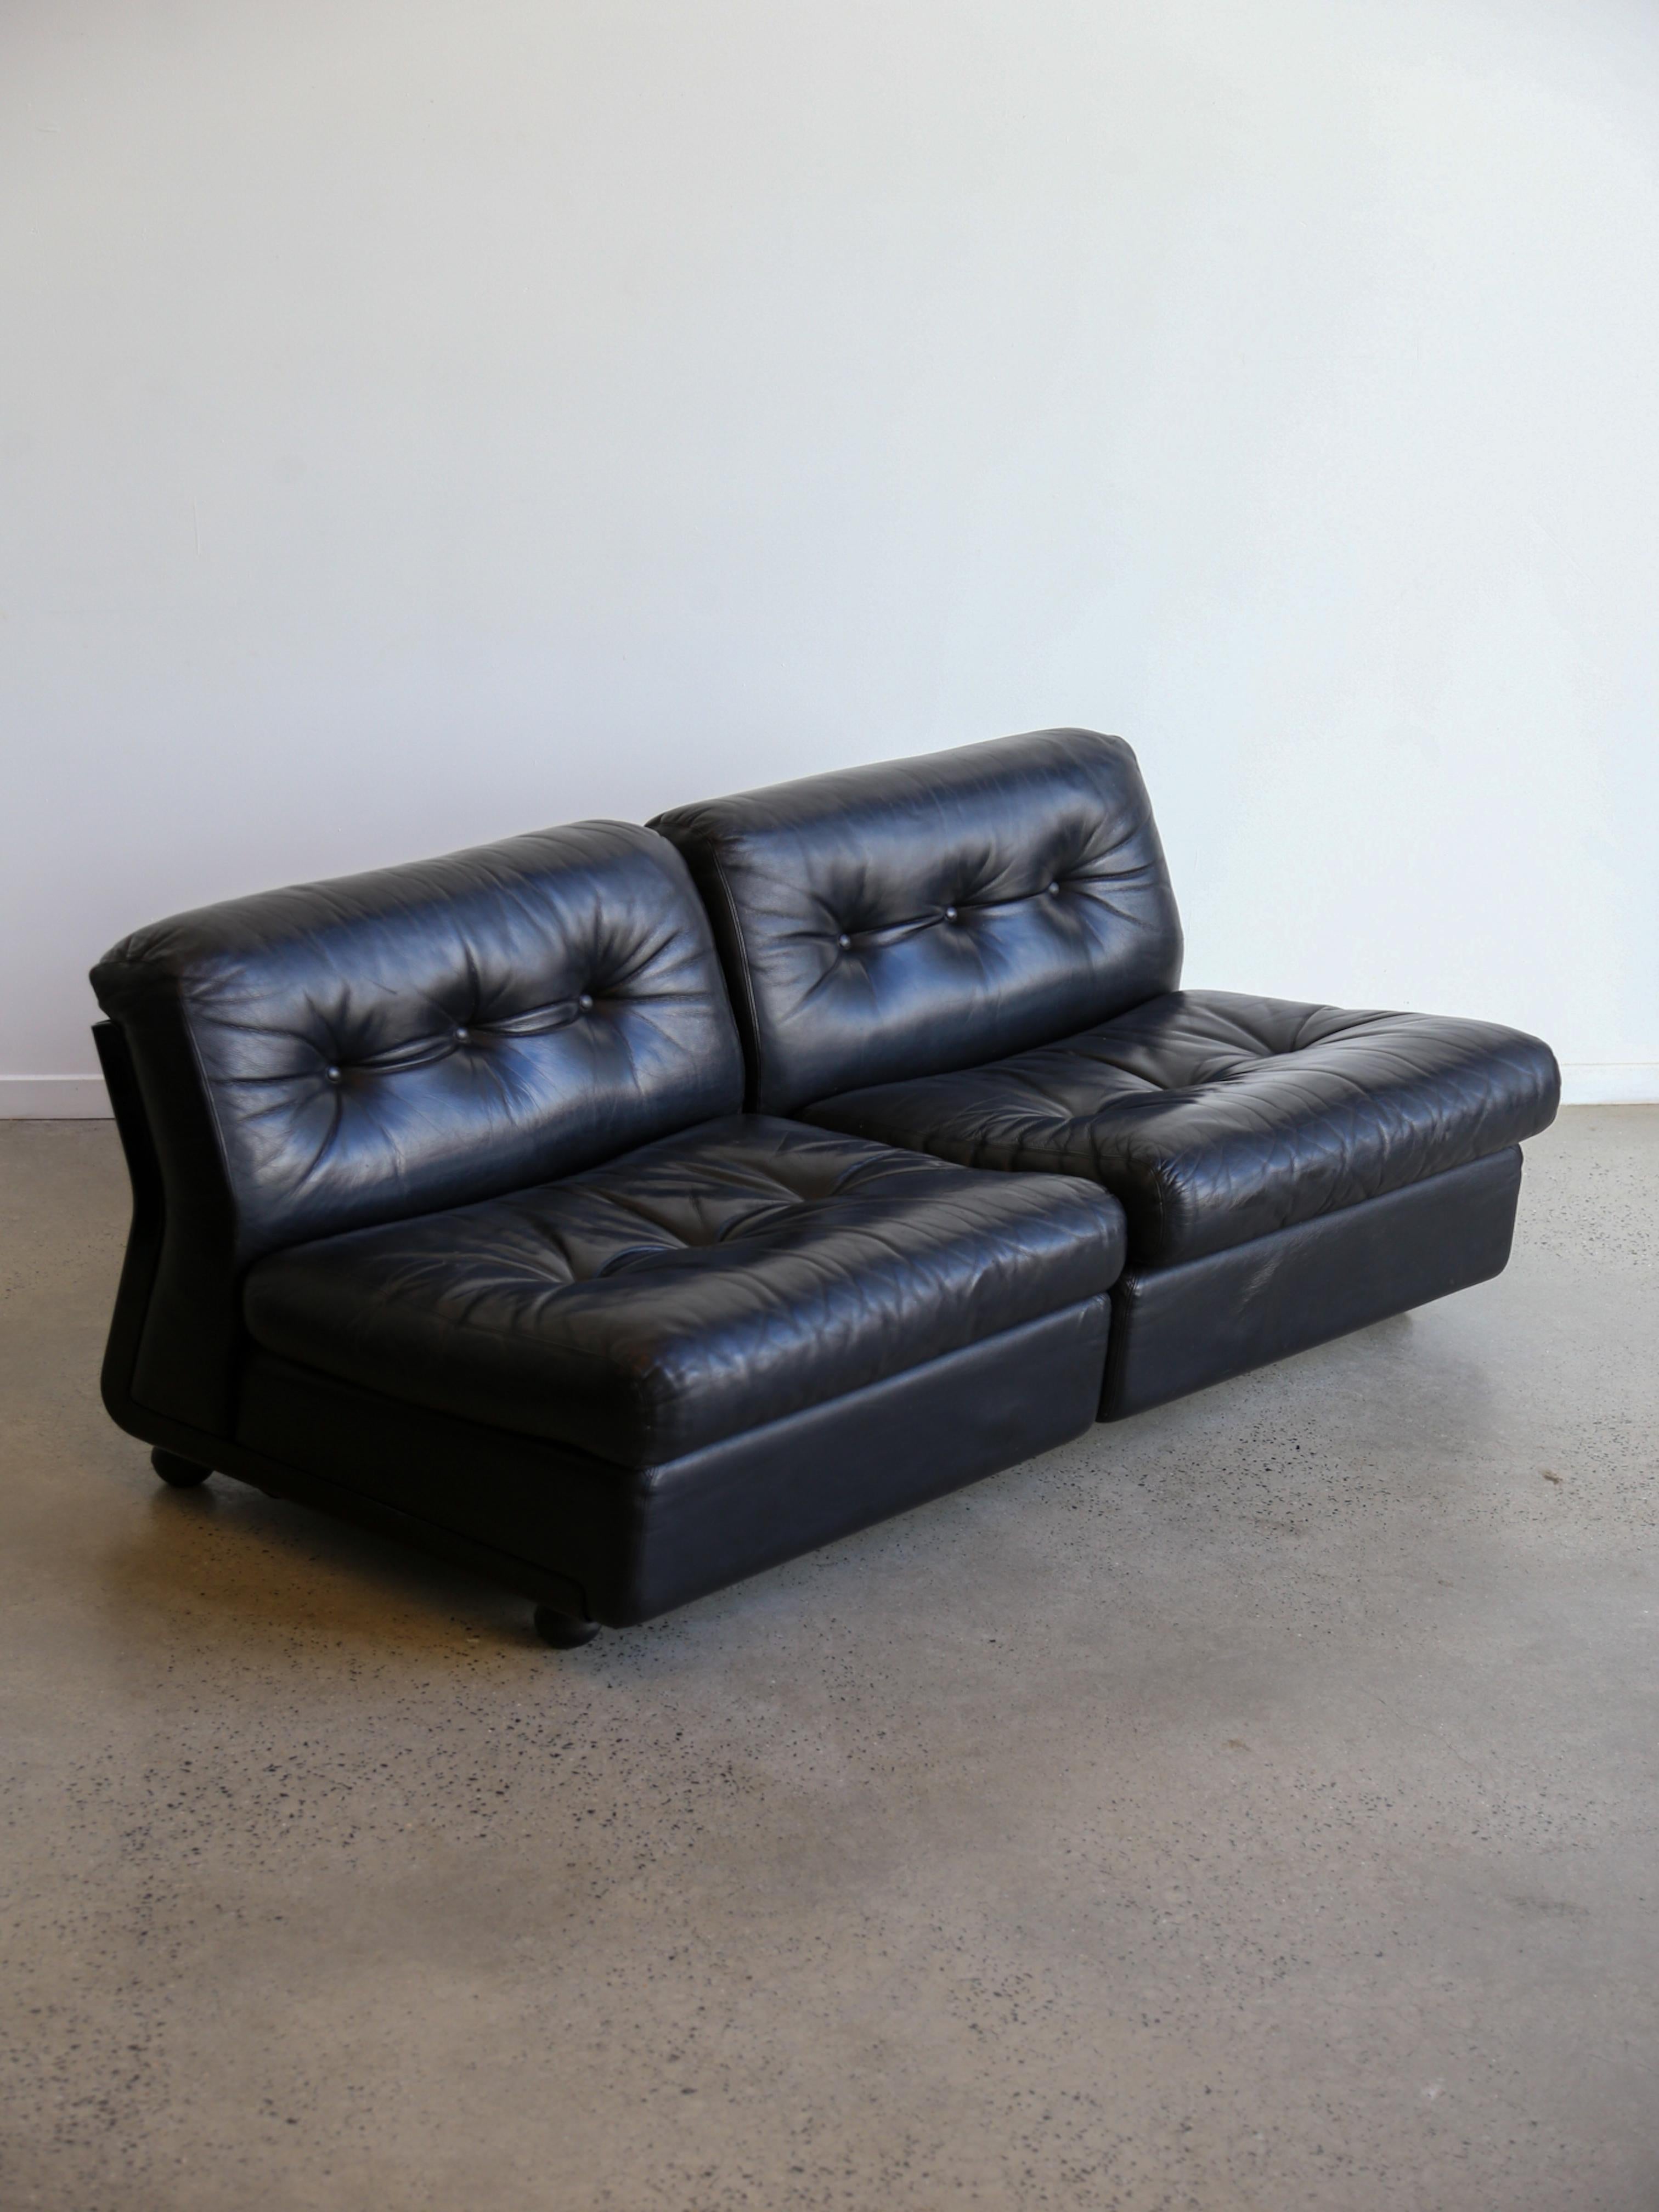 Amanta Modular Sofa in Black Leather By Mario Bellini for B&B Italia 1970 For Sale 1